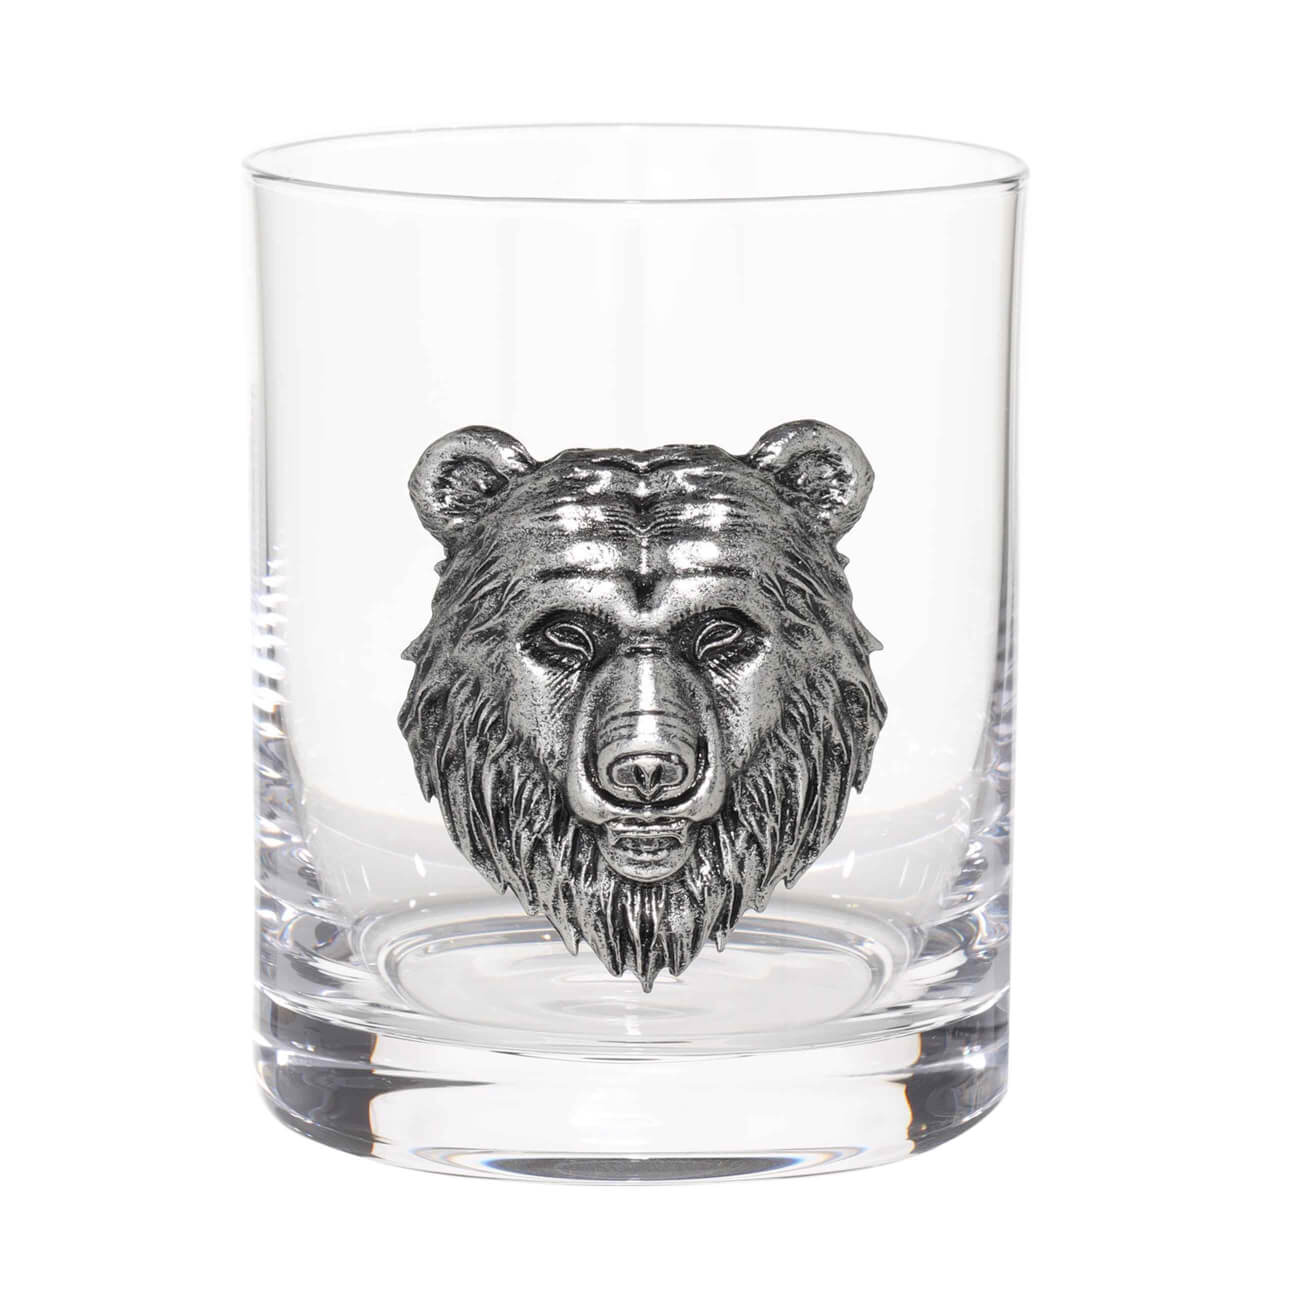 Стакан для виски, 340 мл, стекло/металл, серебристый, Медведь, Lux elements стакан для виски 340 мл стекло металл серебристый медведь lux elements